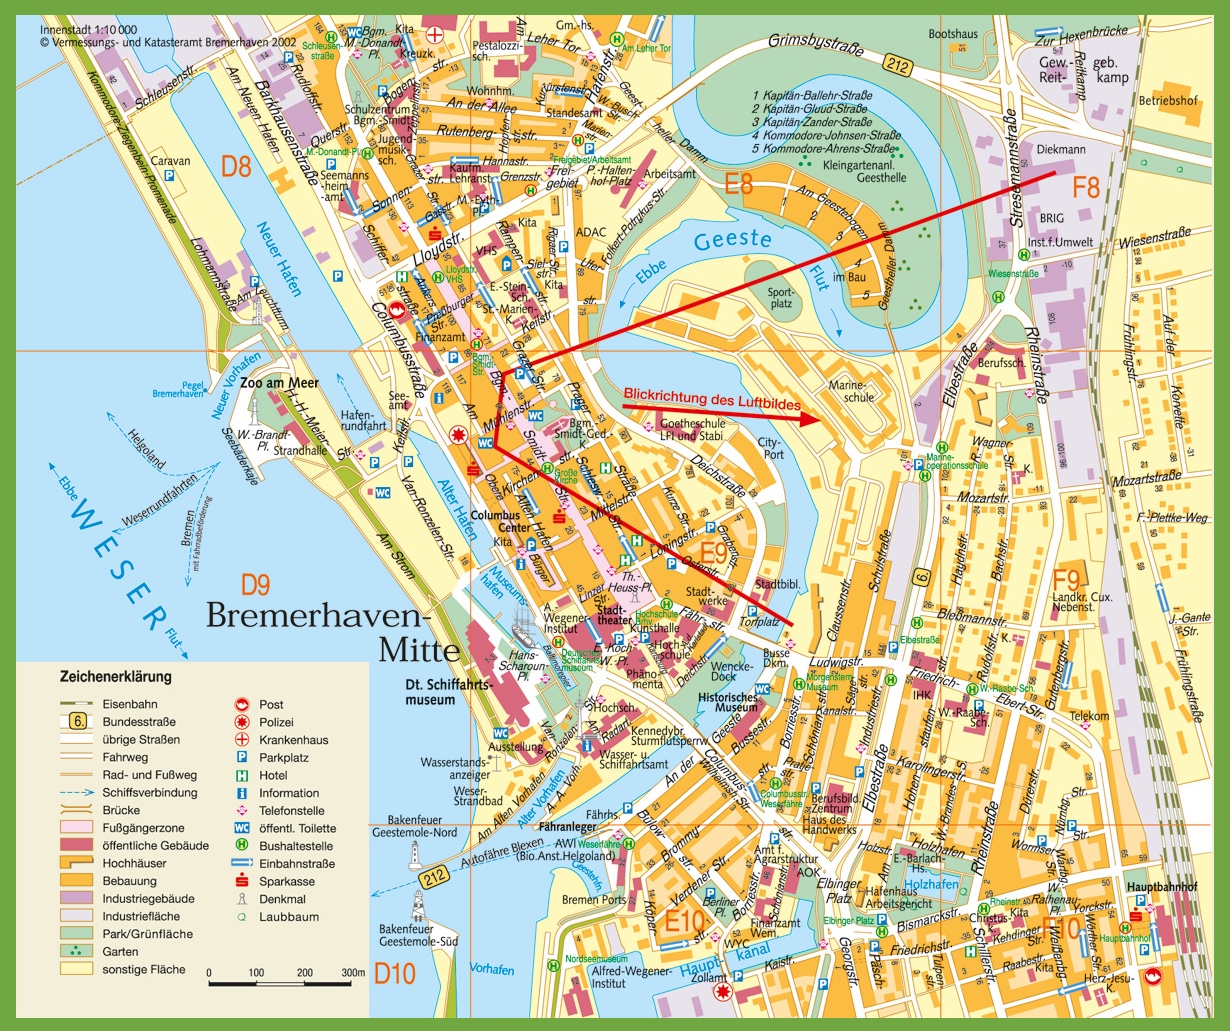 bremerhaven-city-centre-map.jpg